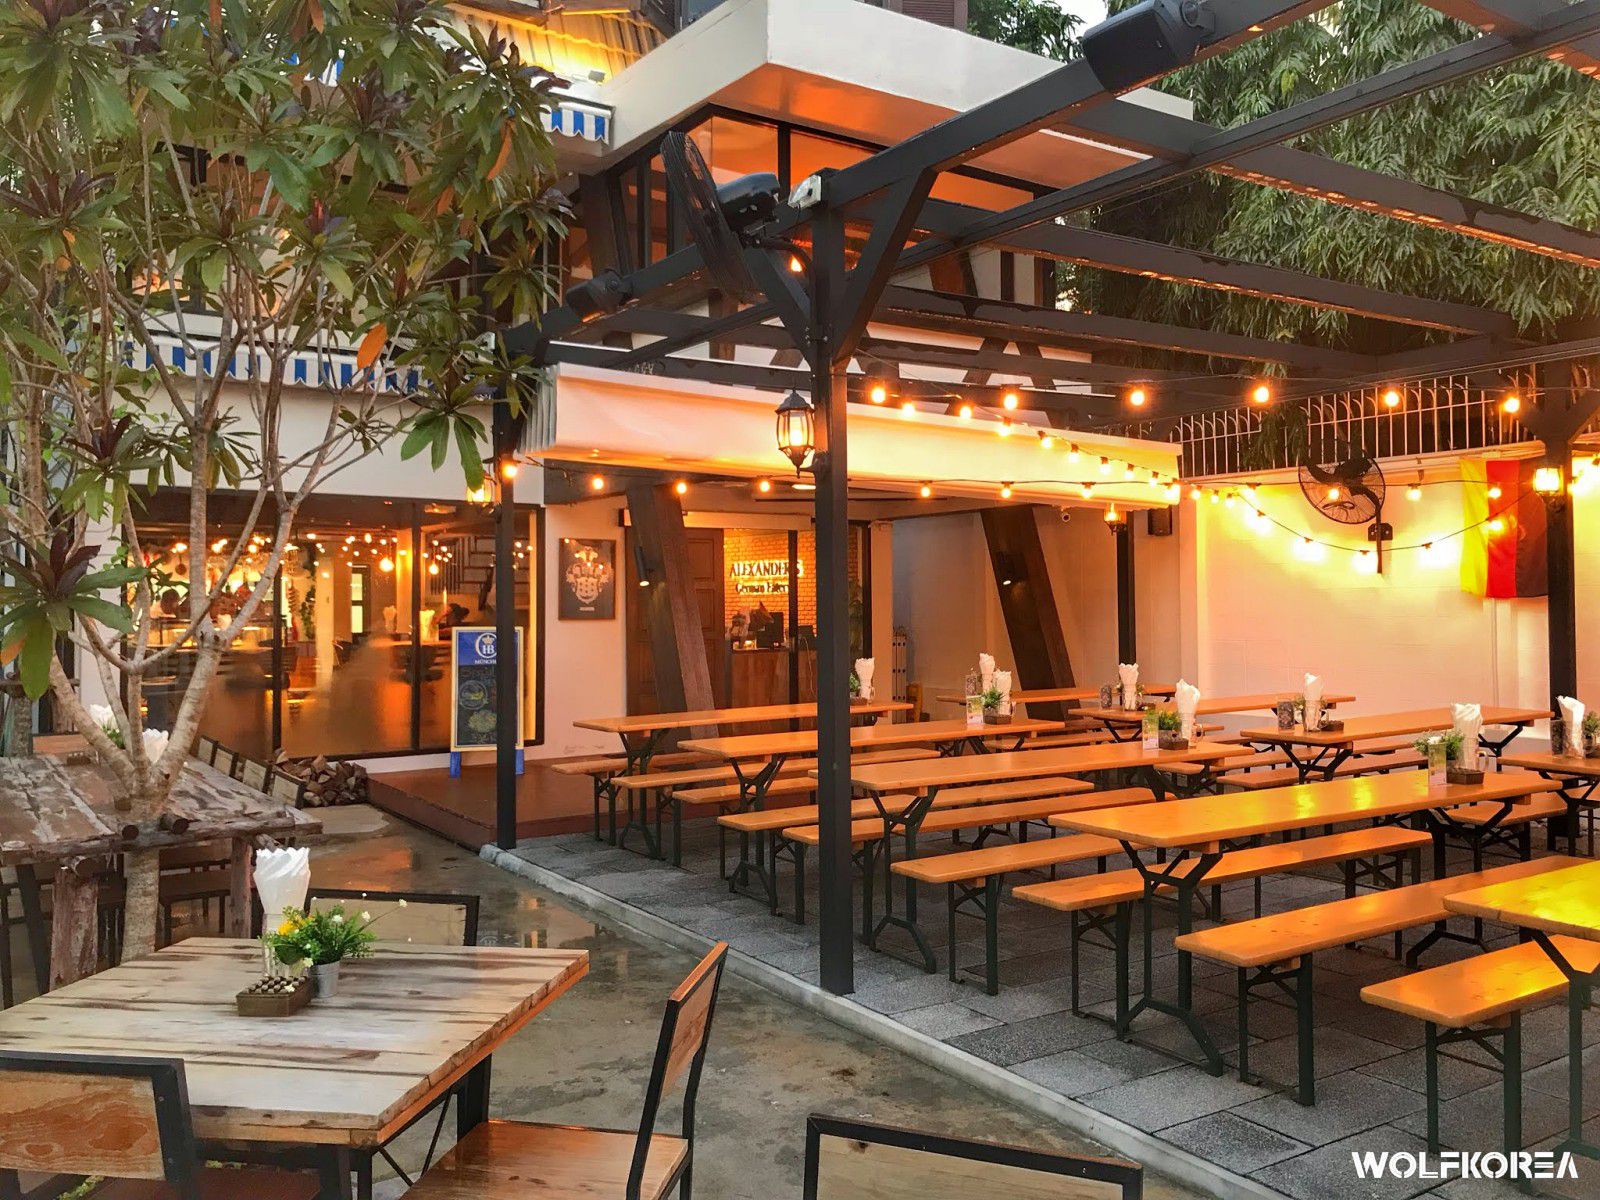 wf_alexanders_german_eatery_bangkok_restaurant_2018_9.jpg